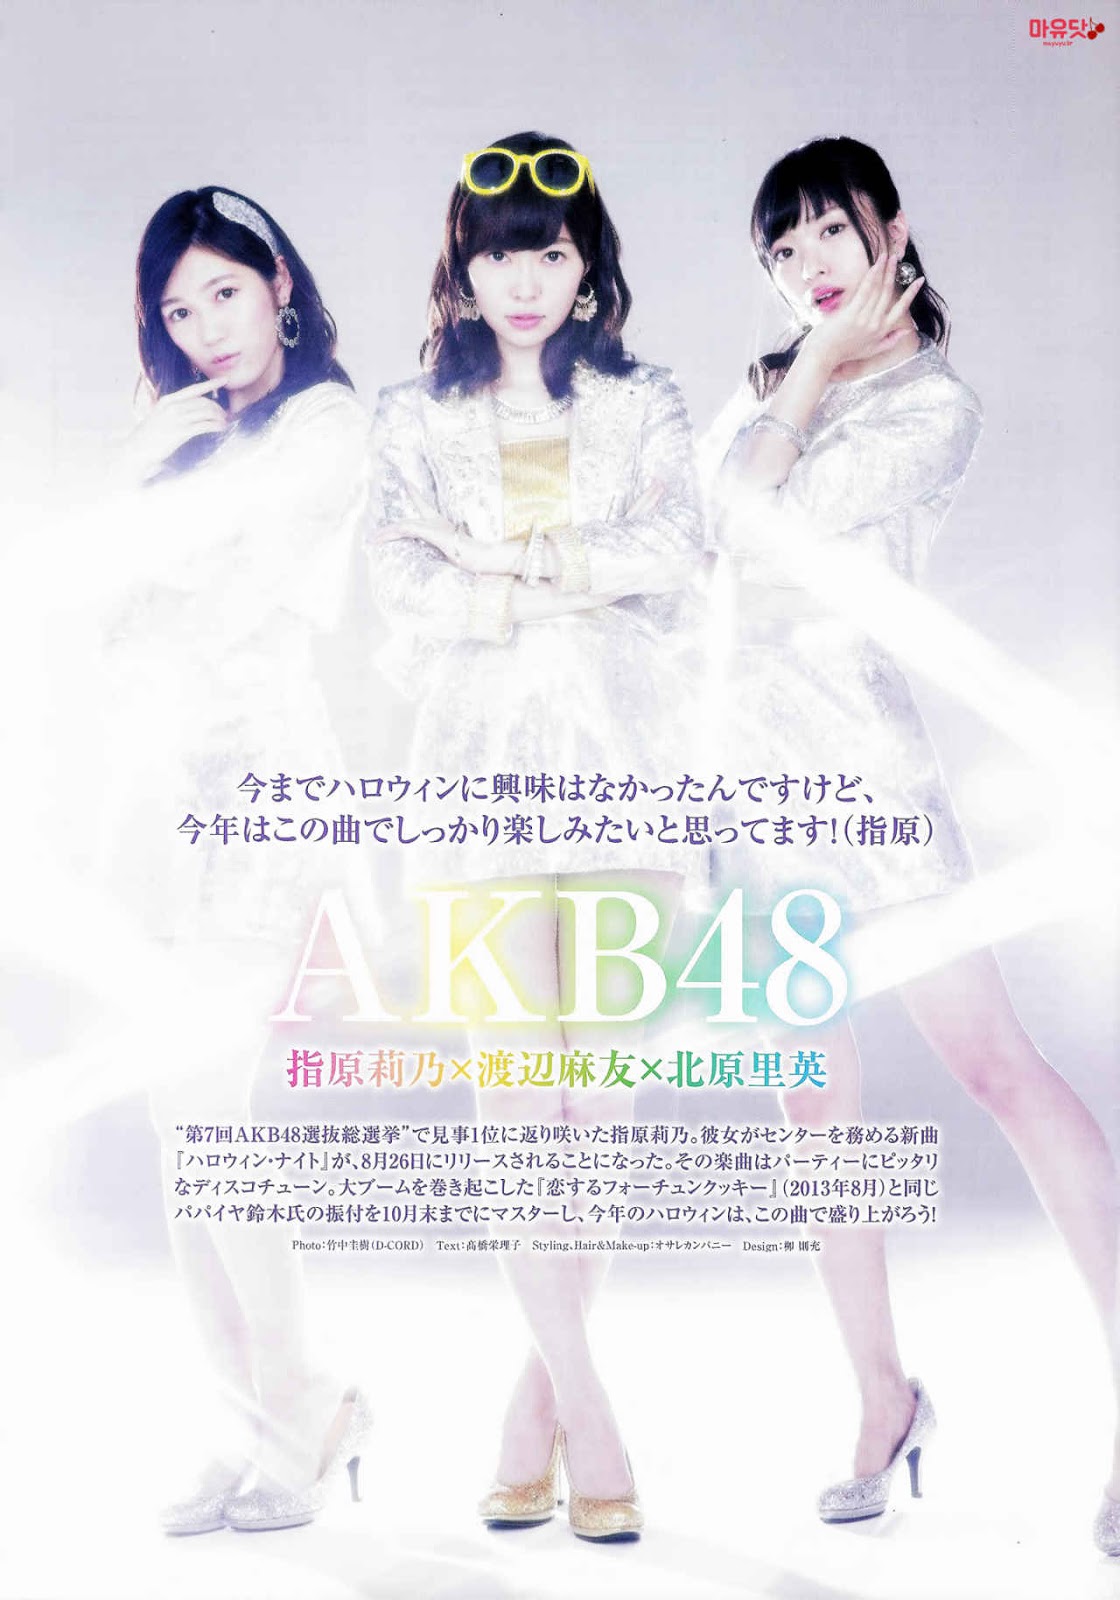 HEBIROTE AKB48 - Photos Videos News: AKB48 Halloween Night 